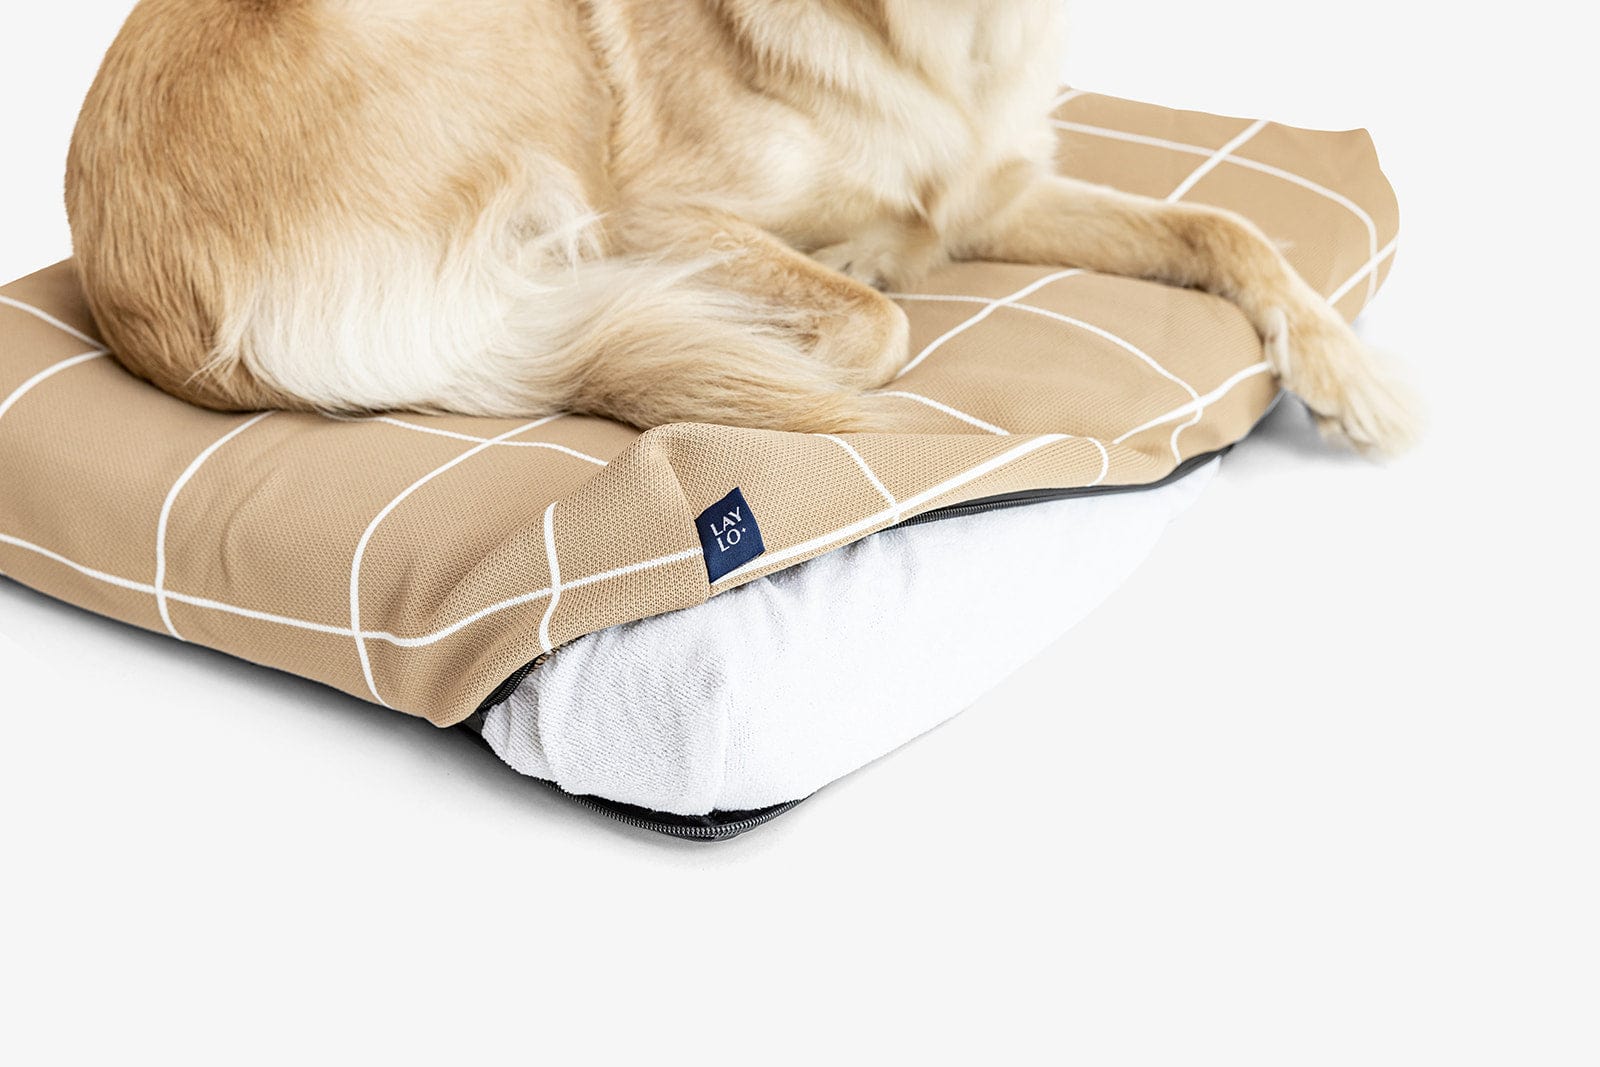 LAY LO™ Pets Animals & Pet Supplies LAY LO Pets - Premium Waterproof Dog Bed Liner & Stuff Sack Lay Lo Pets